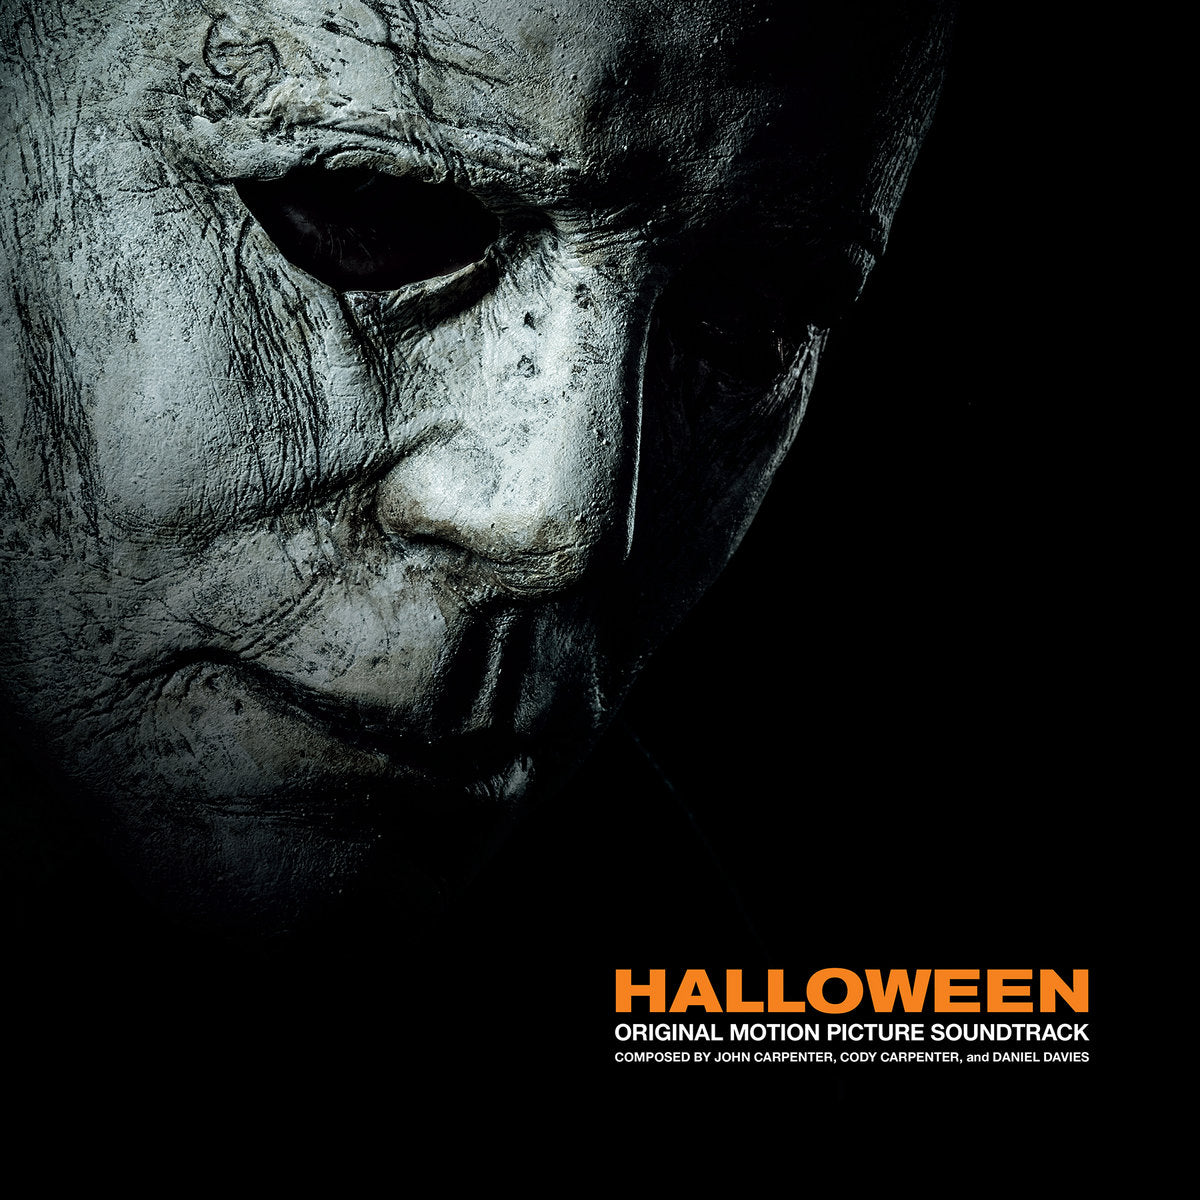 John Carpenter, Cody Carpenter, and Daniel Davies - Halloween: Original Motion Picture Soundtrack (Black Vinyl)